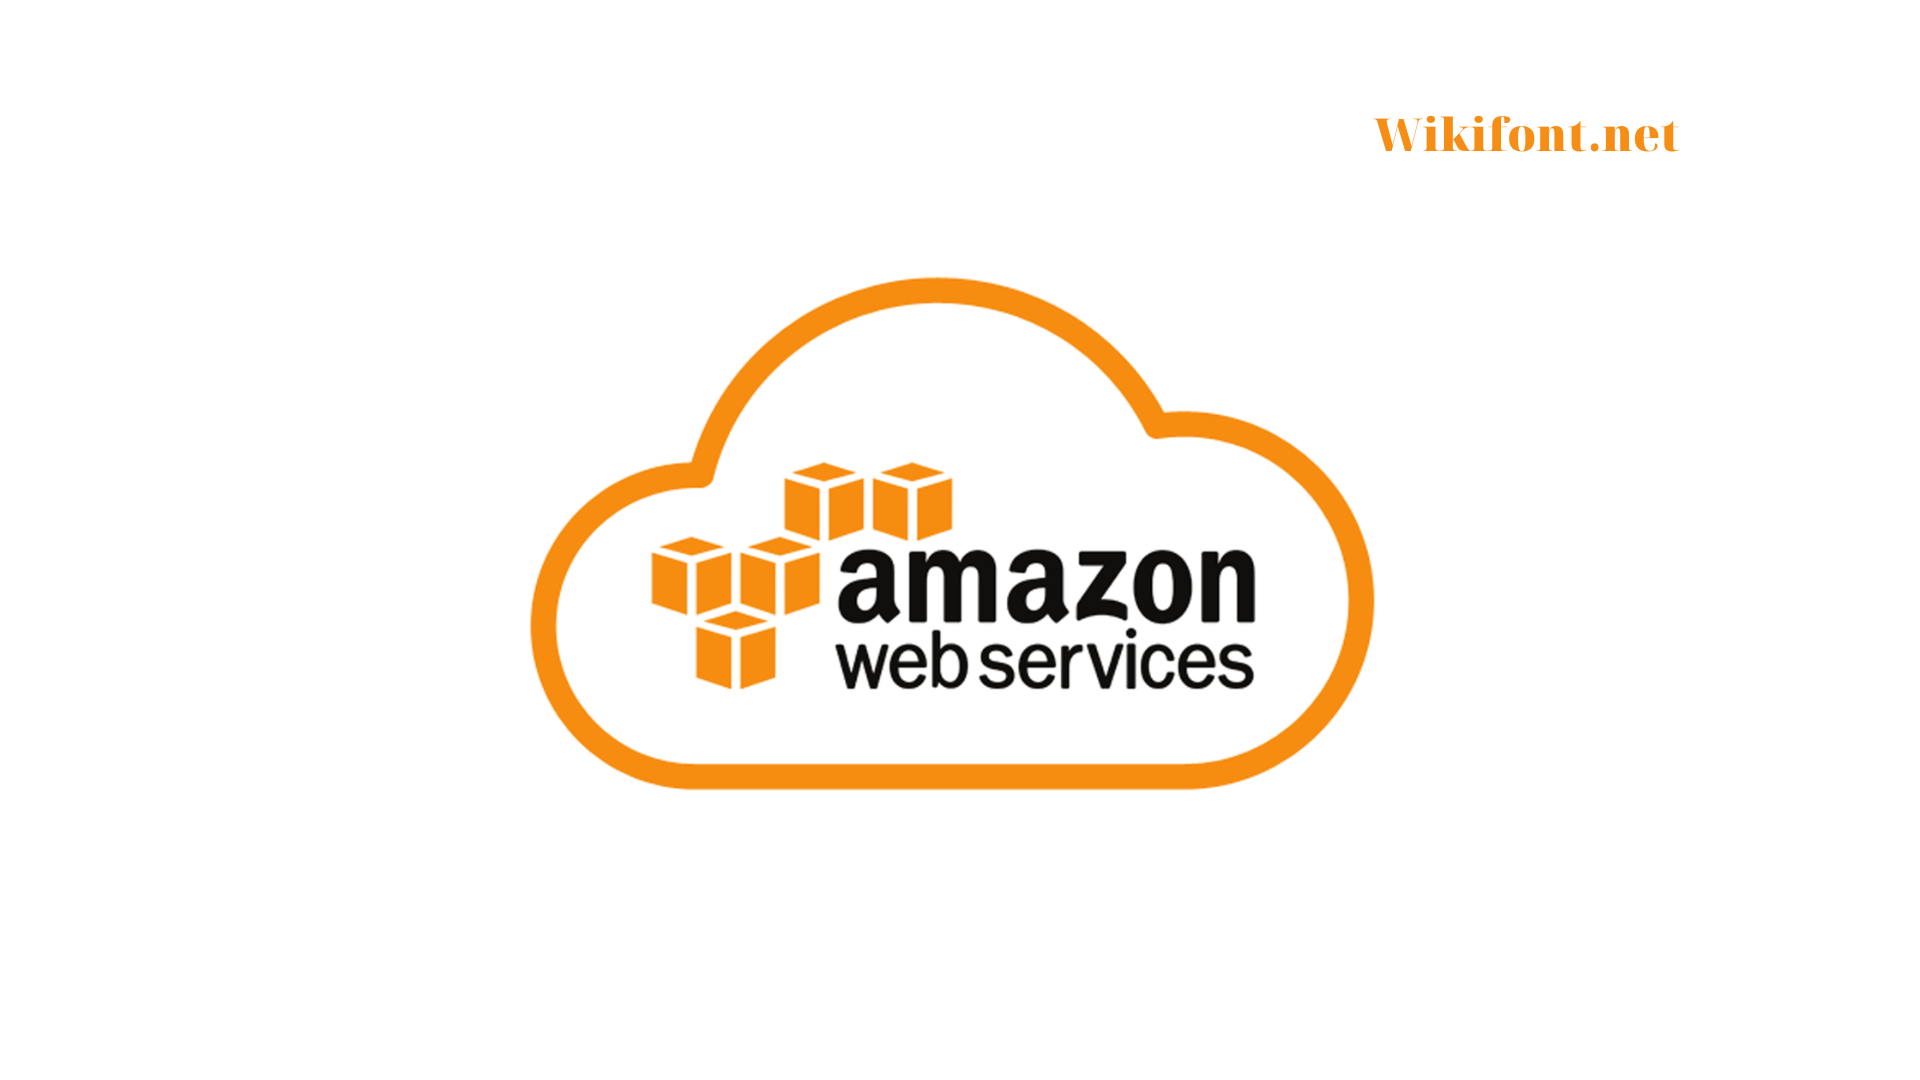 Amazon Web Services (AWS) is the biggest Enterprise Cloud Services providers